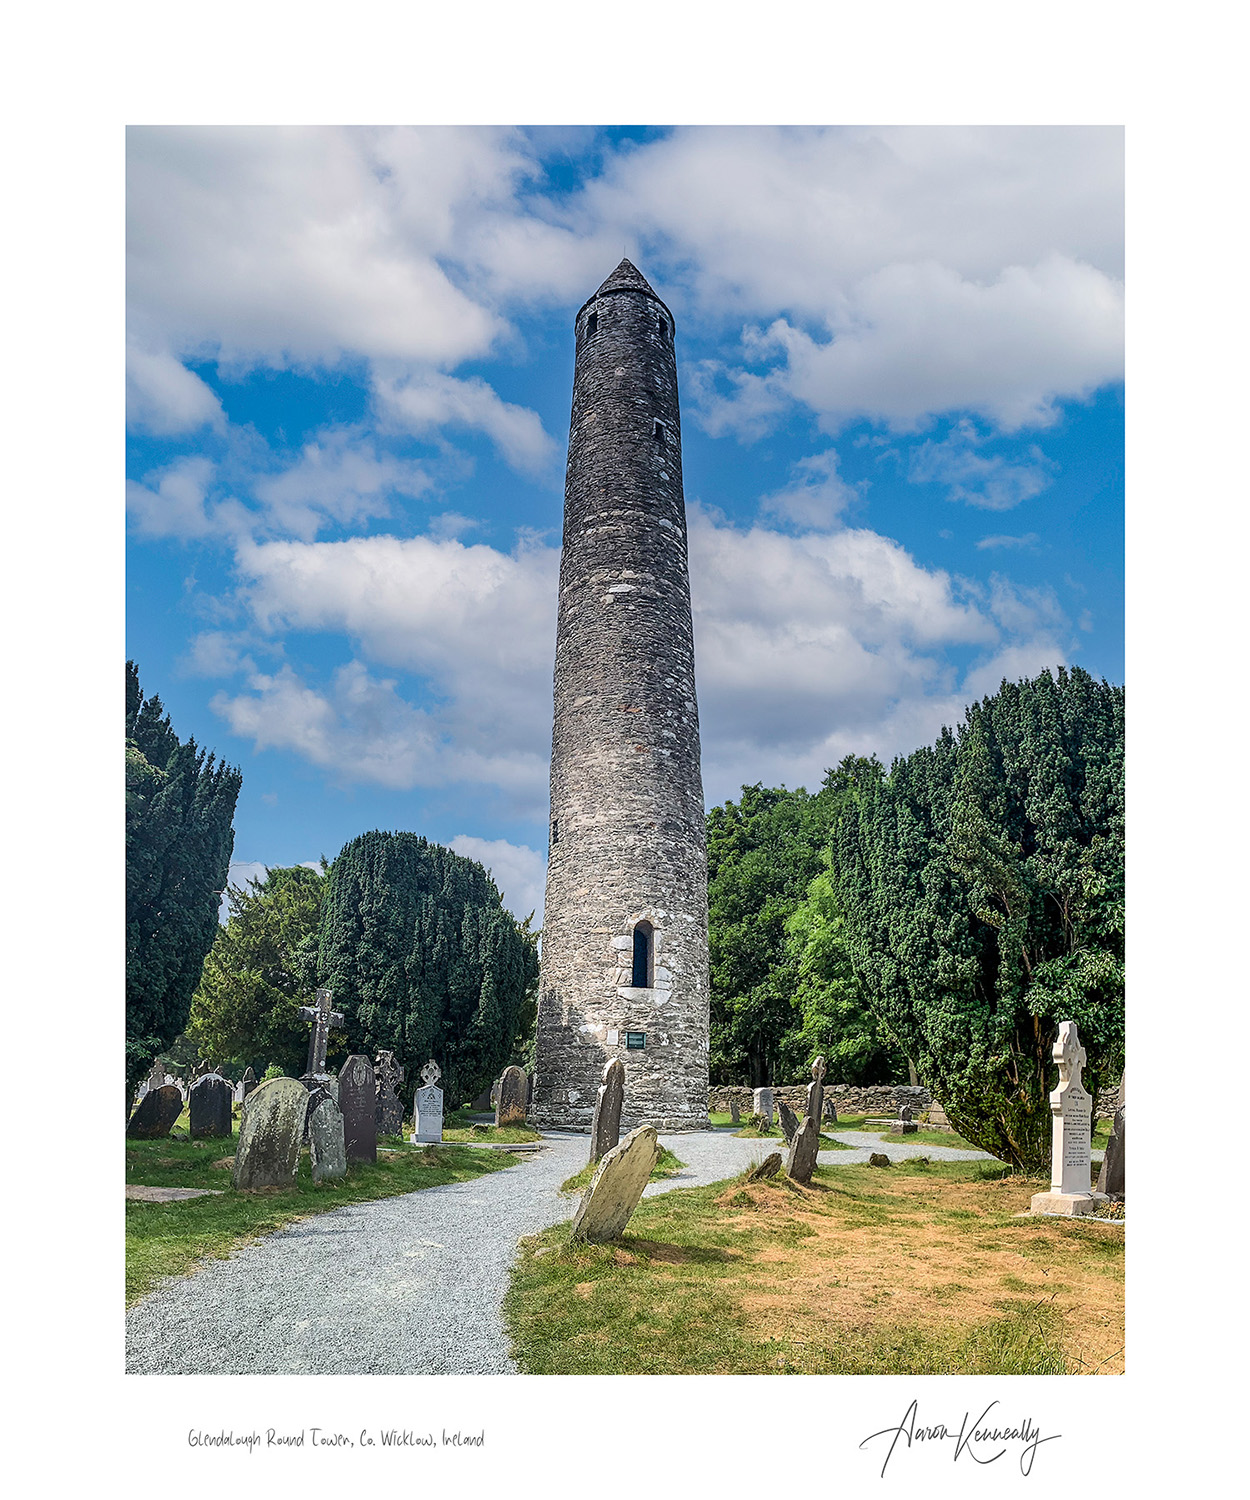 Glendalough Round Tower, Glendalough, Co. Wicklow, Ireland